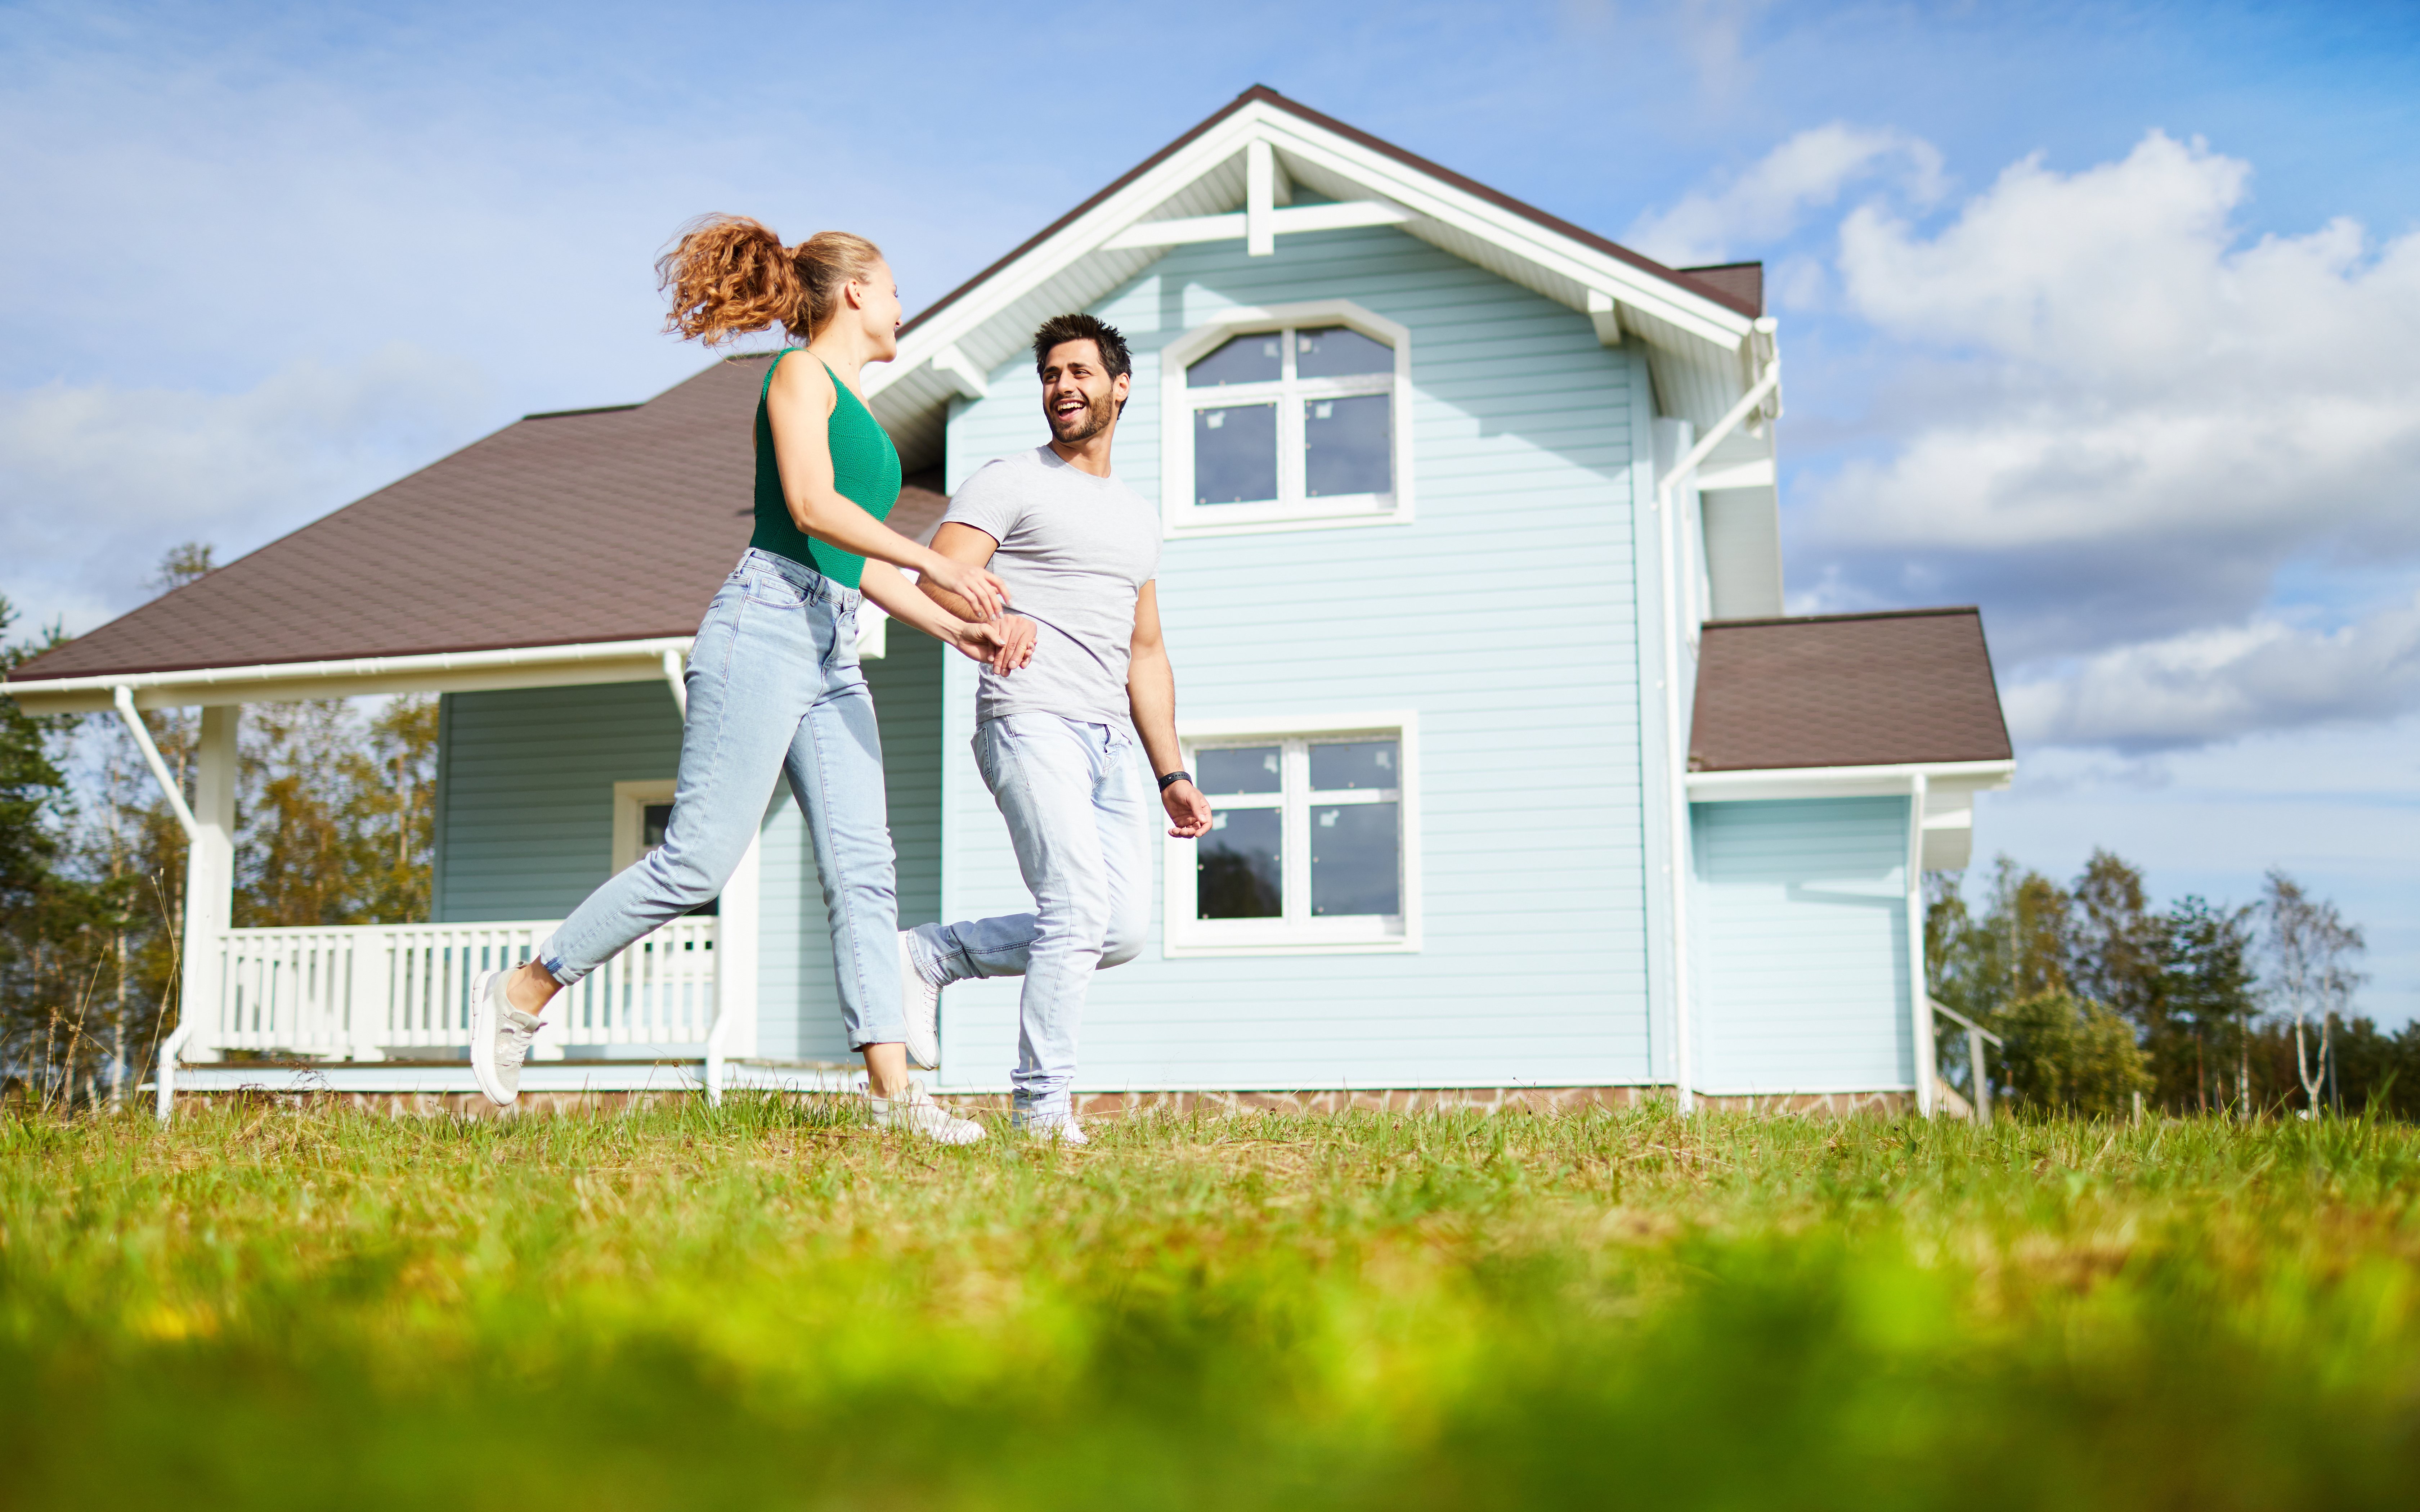 Кредит под строительство дома под залог недвижимости как взять кредит на строительство дома без первоначального взноса в сбербанке